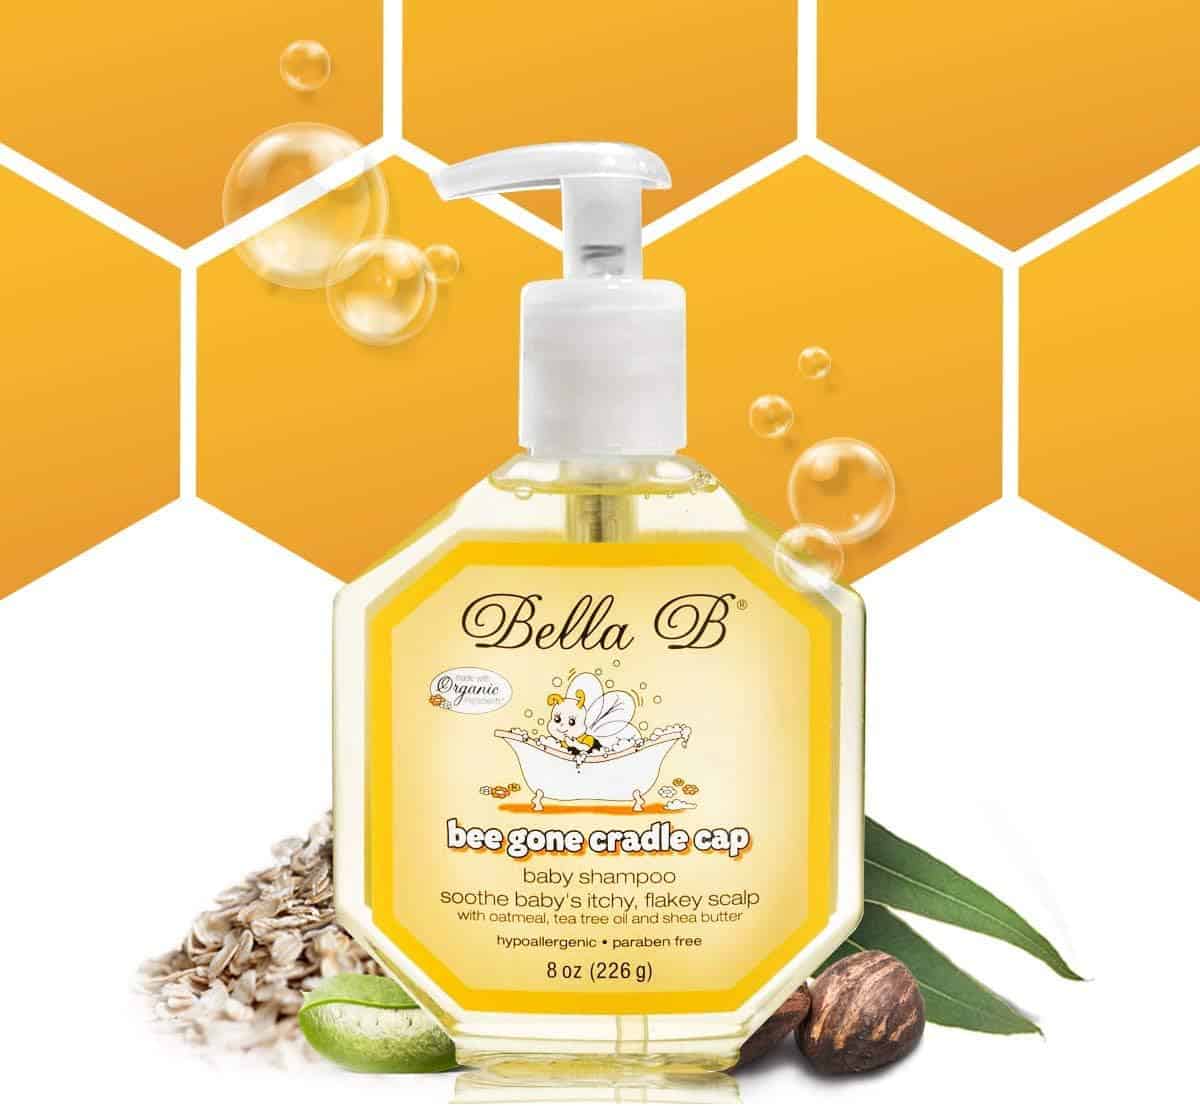 BELLA B NATURALS Bee Gone Cradle Cap Baby Shampoo